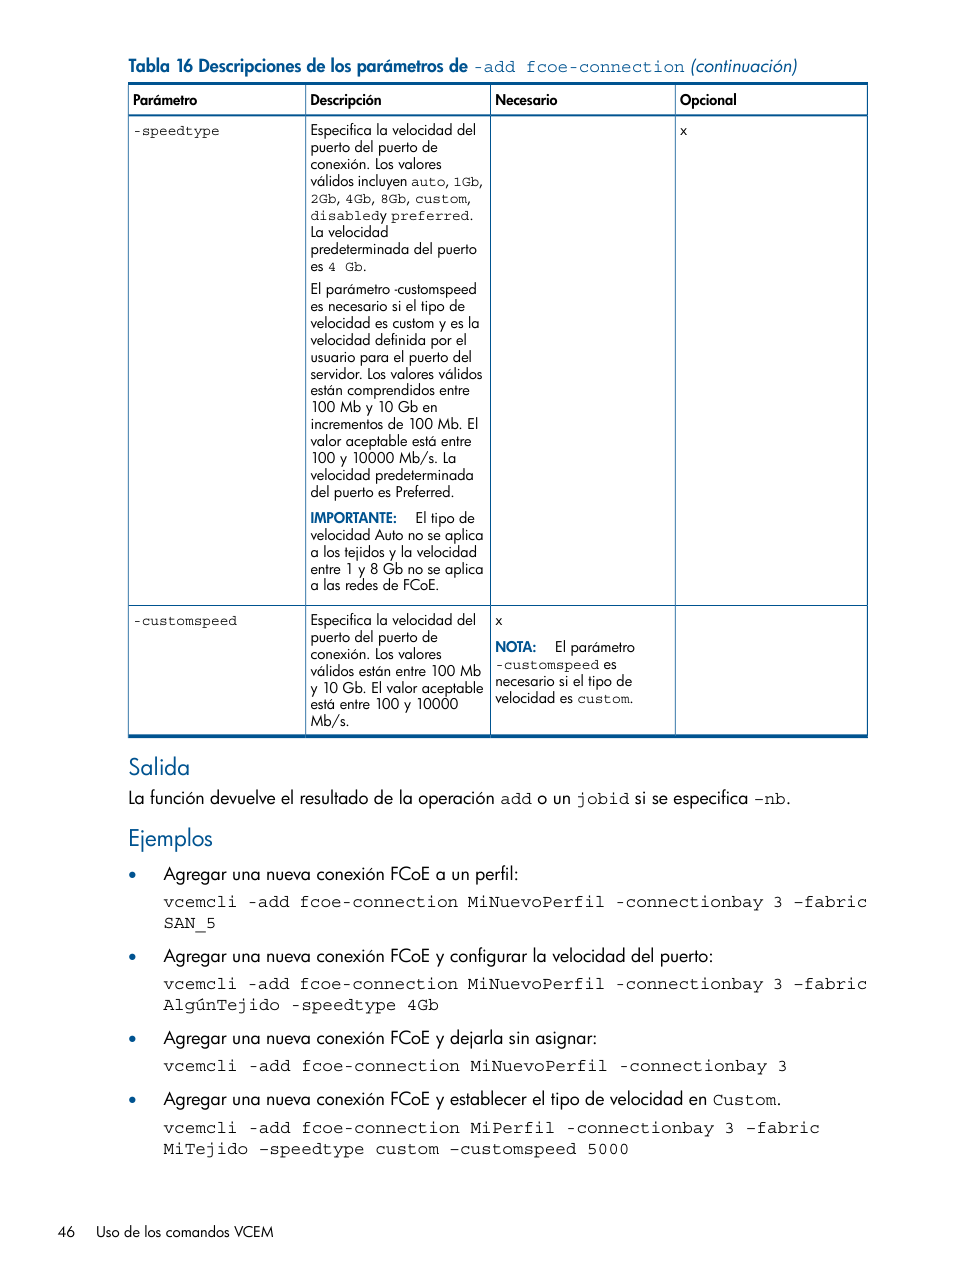 Salida, Ejemplos | HP Software HP Virtual Connect Enterprise Manager Manual del usuario | Página 46 / 123